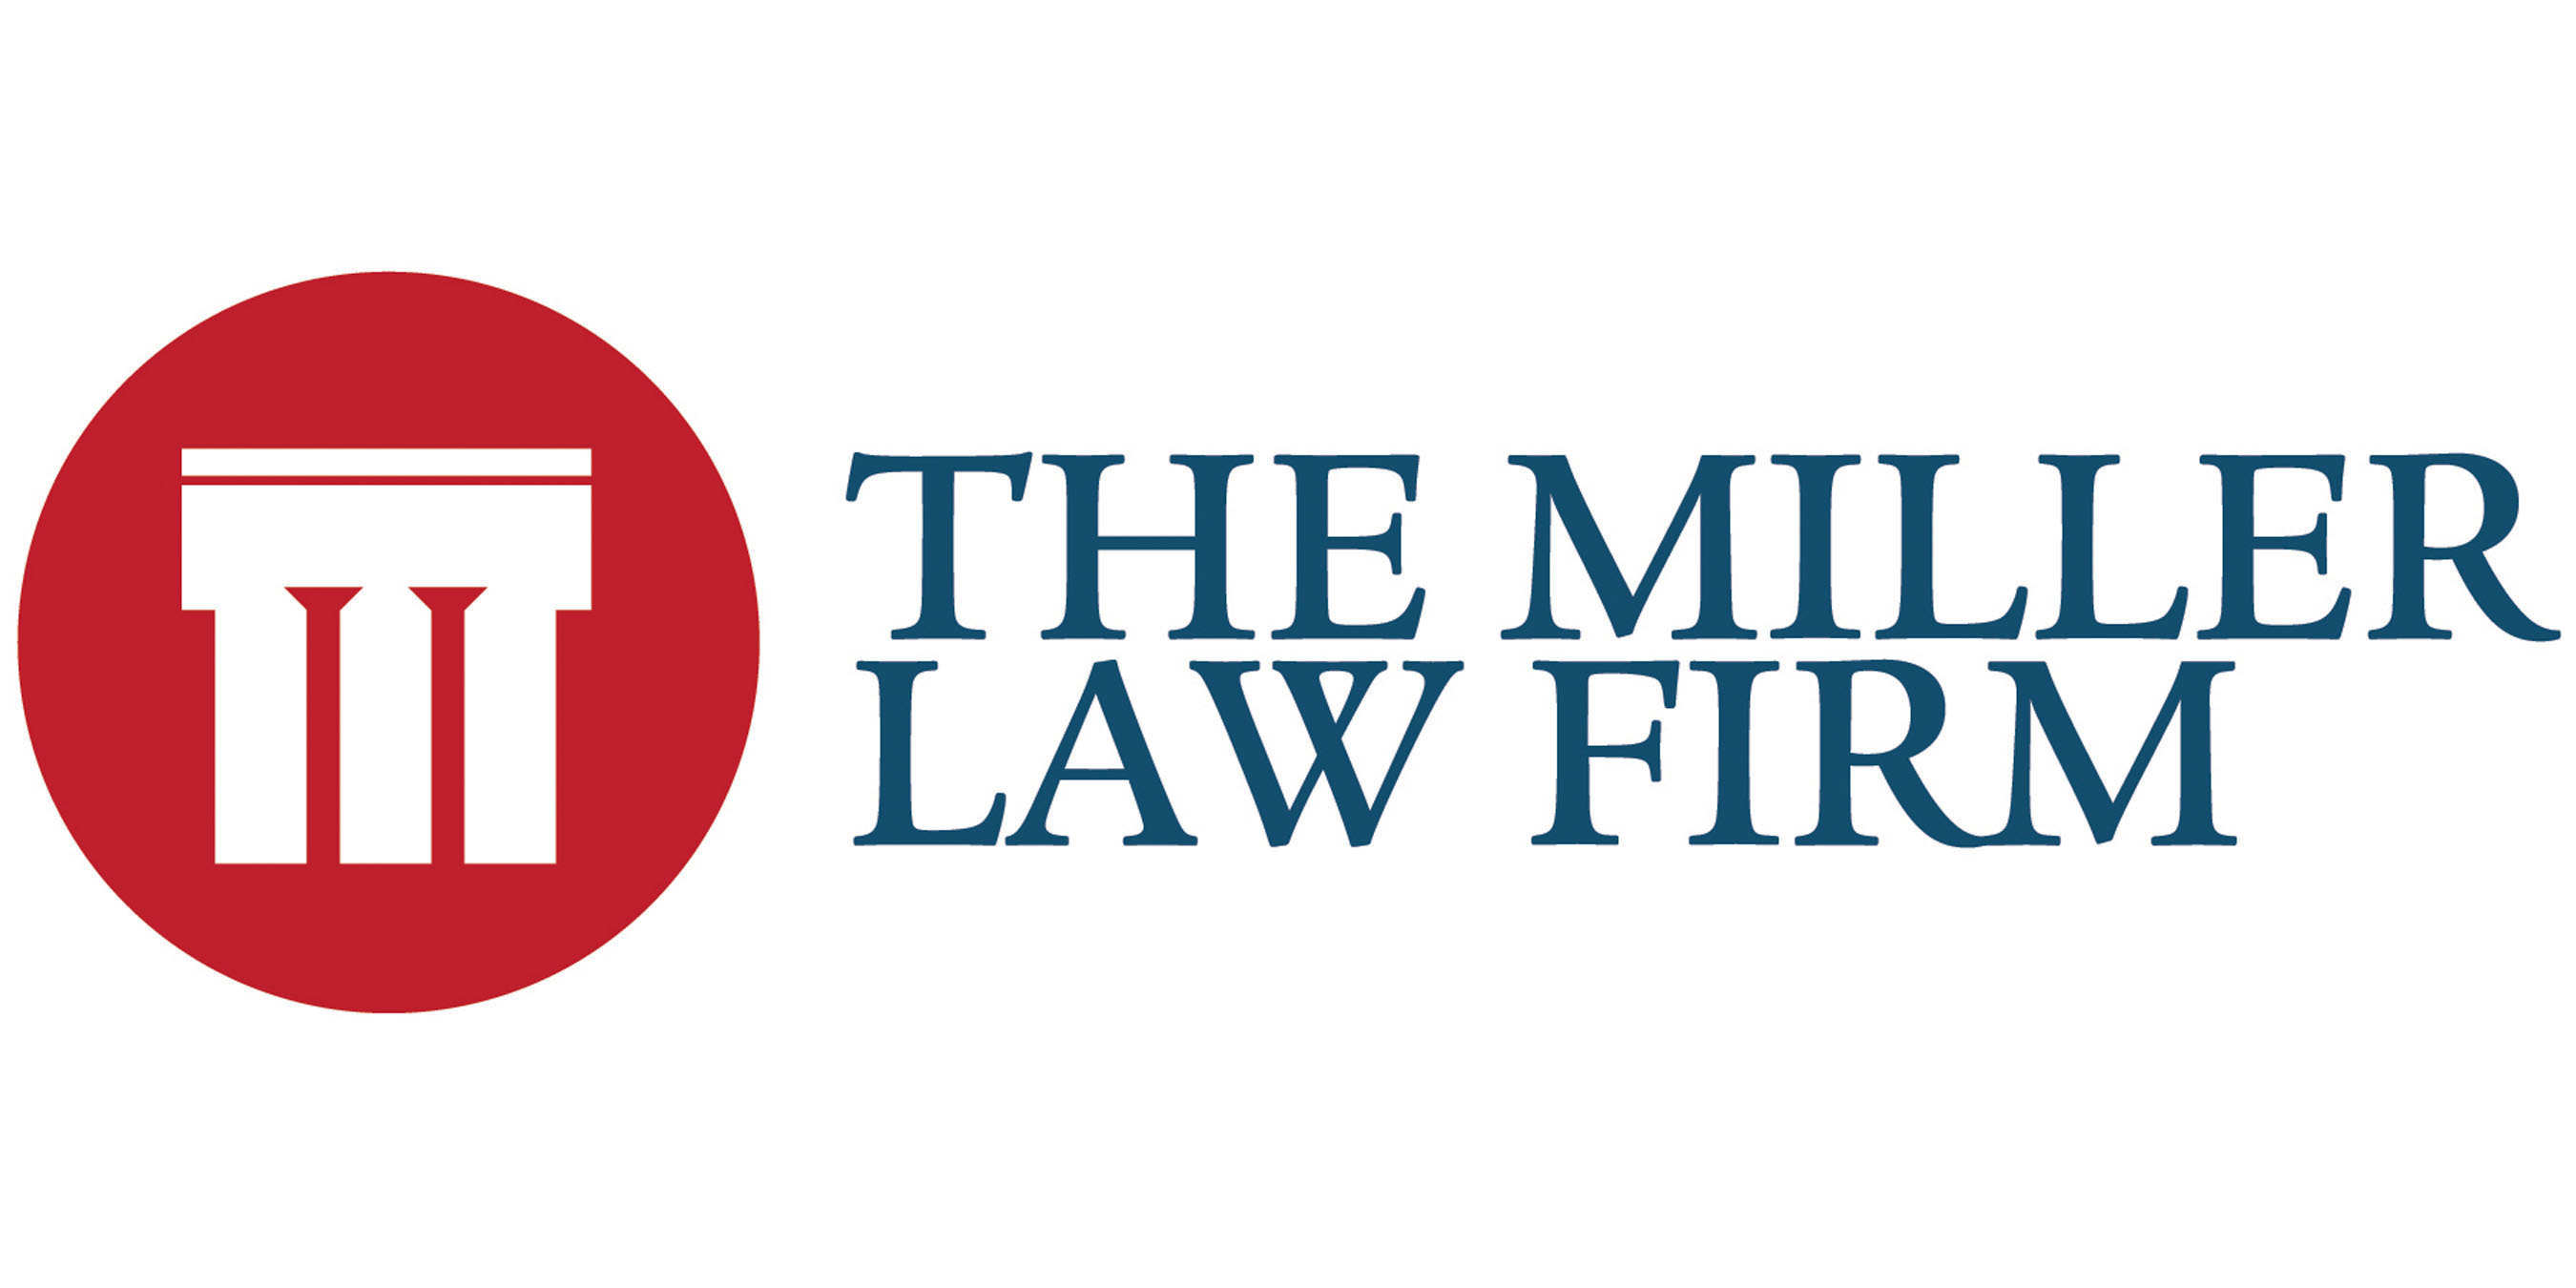 The Miller Law Firm logo. (PRNewsFoto/The Miller Law Firm) (PRNewsFoto/)